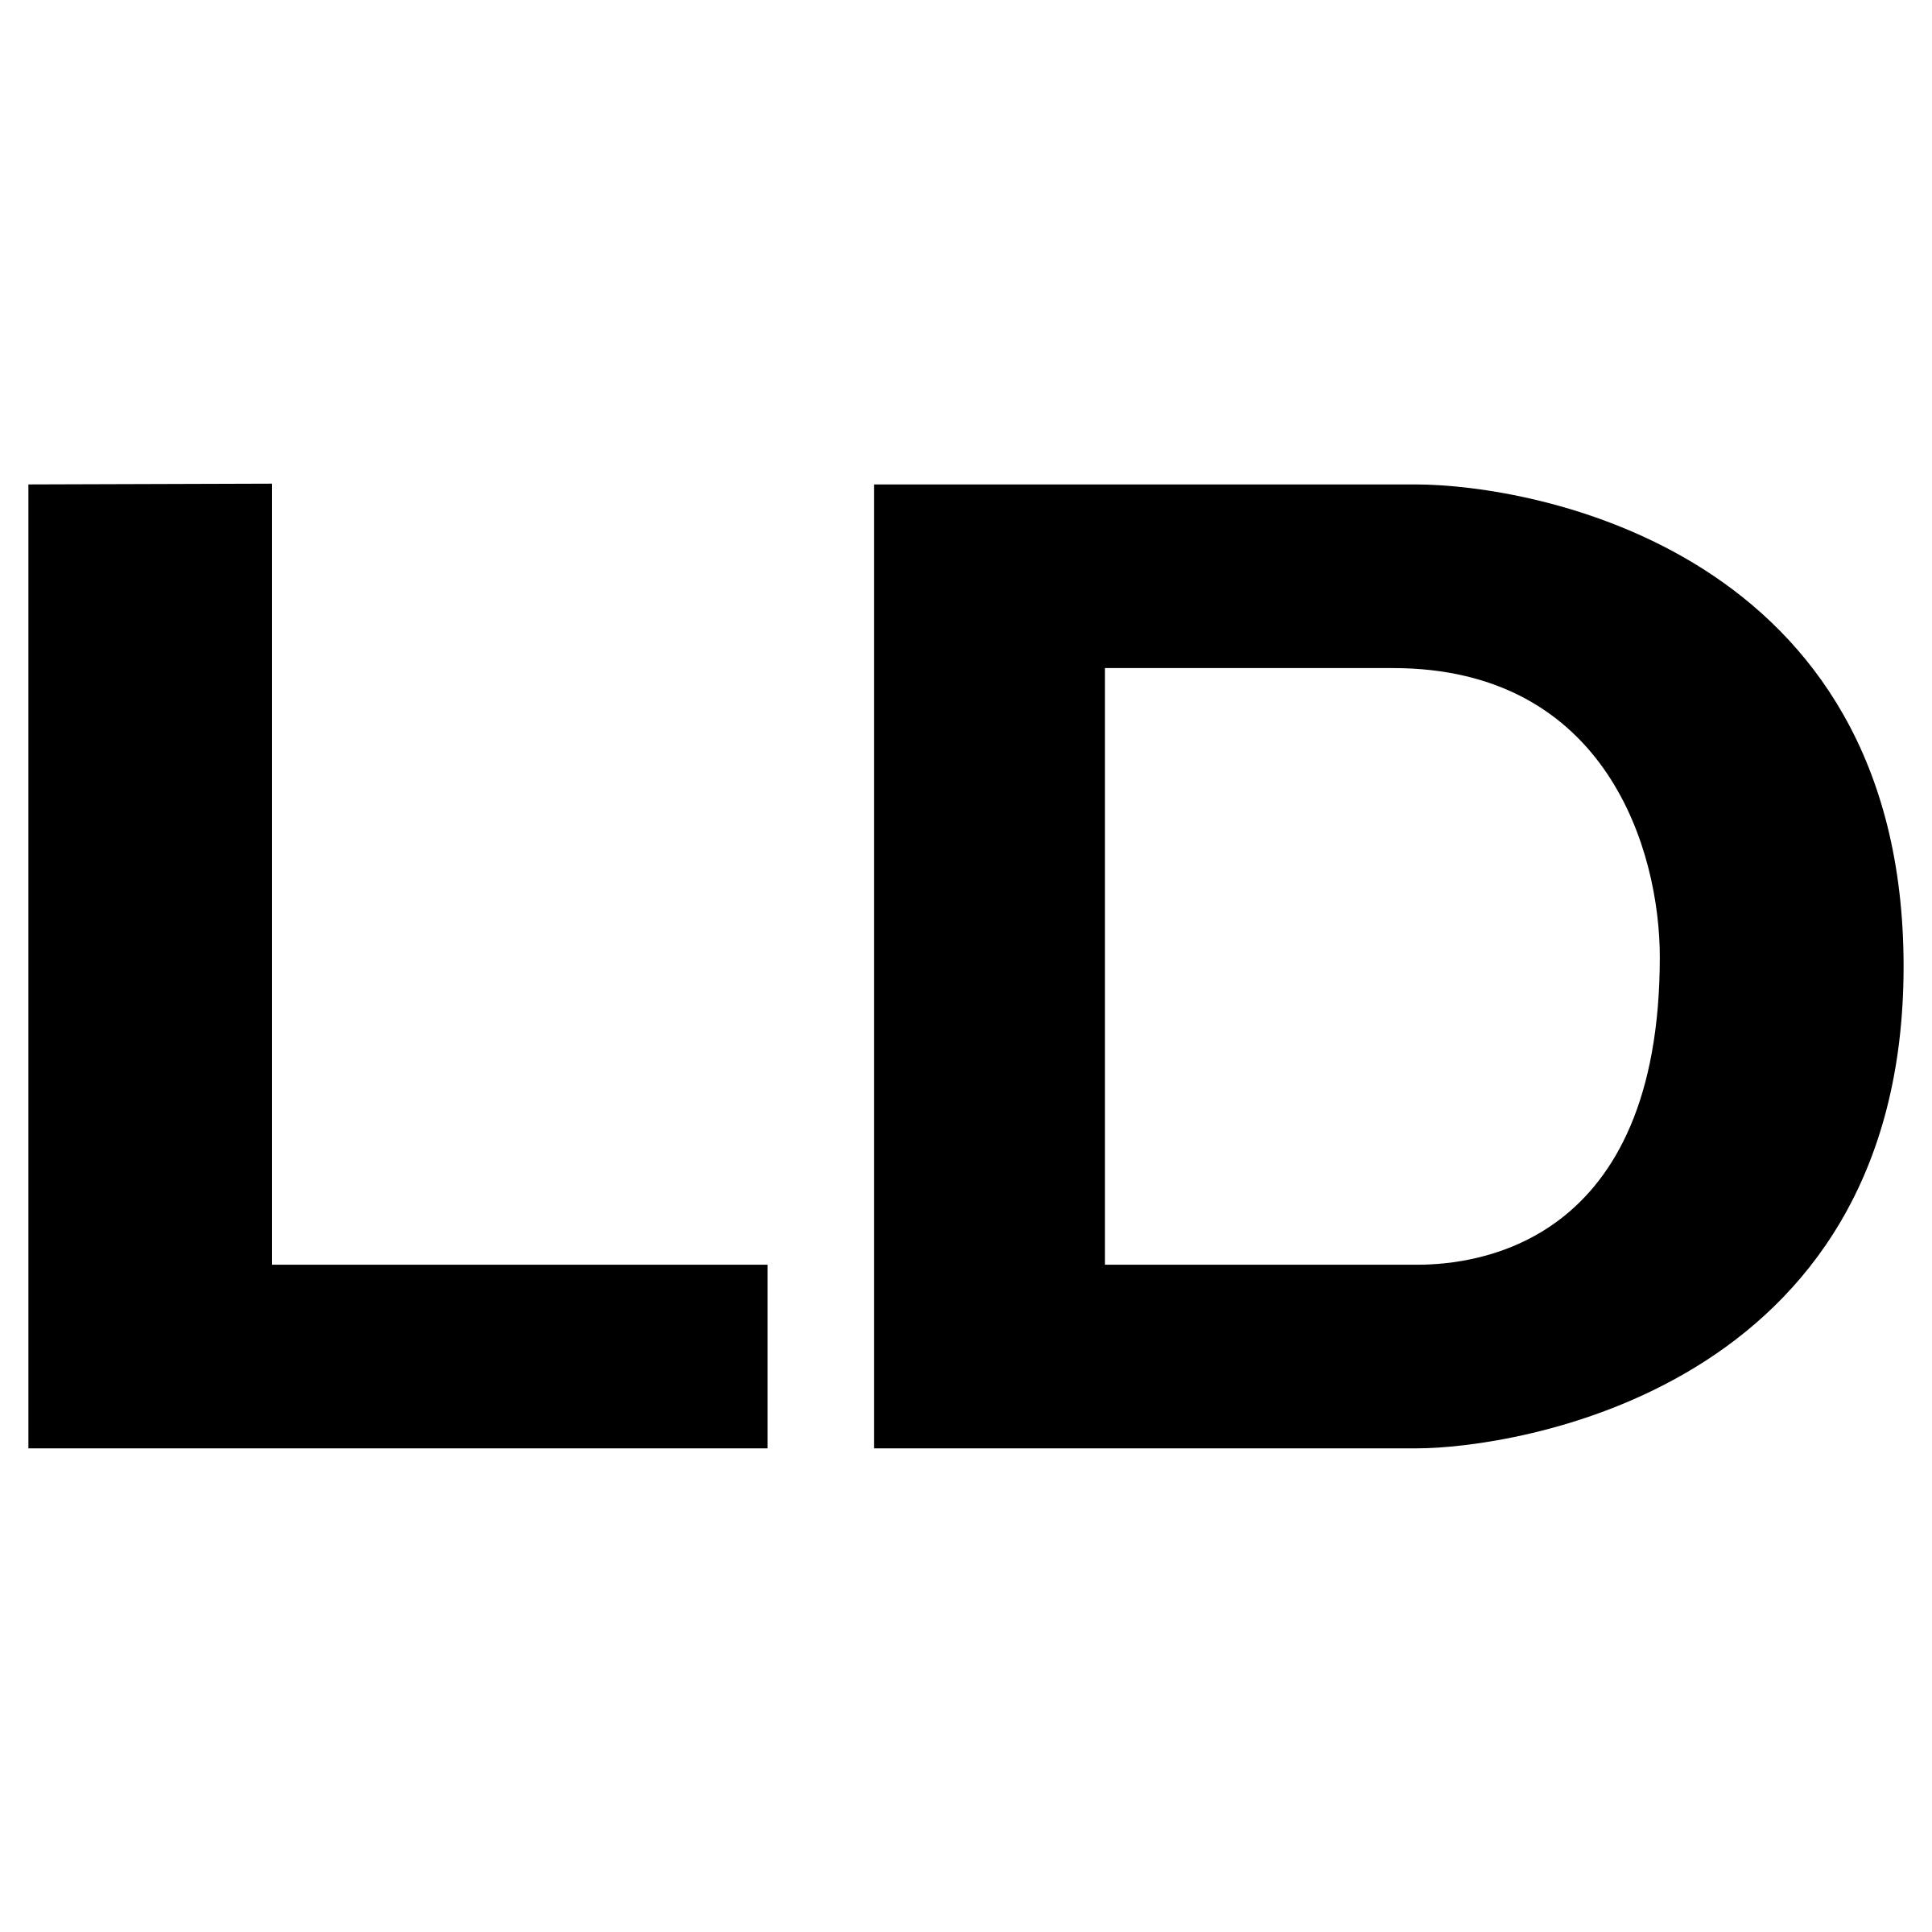 LD Logo - LD Logo PNG Transparent & SVG Vector - Freebie Supply